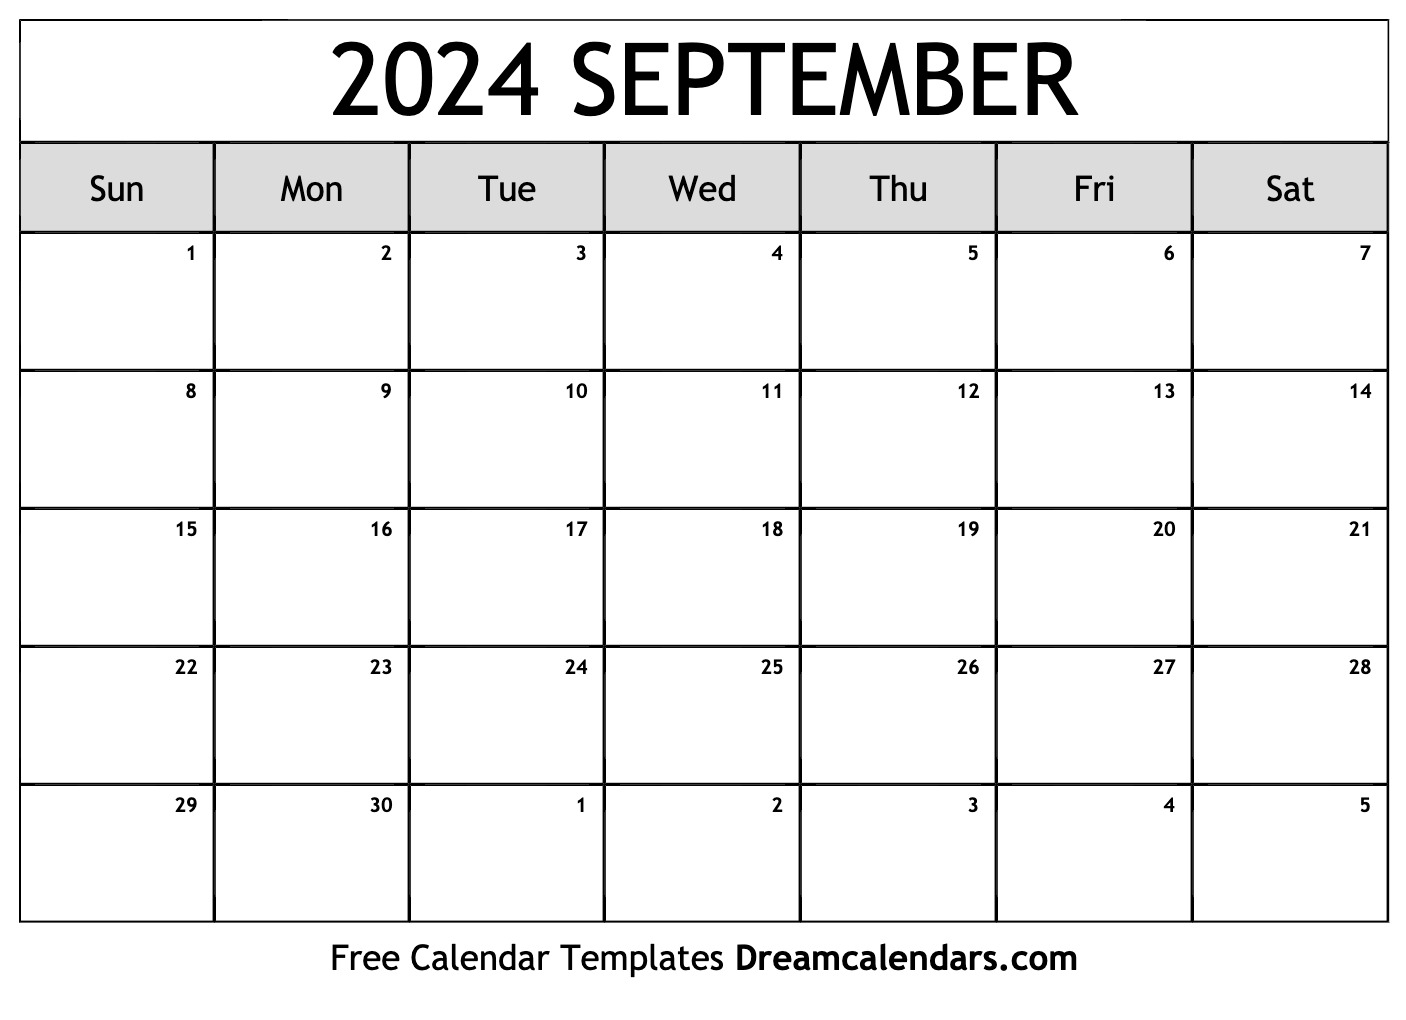 September 2024 Calendar | Free Blank Printable With Holidays for 2024 September Printable Calendar